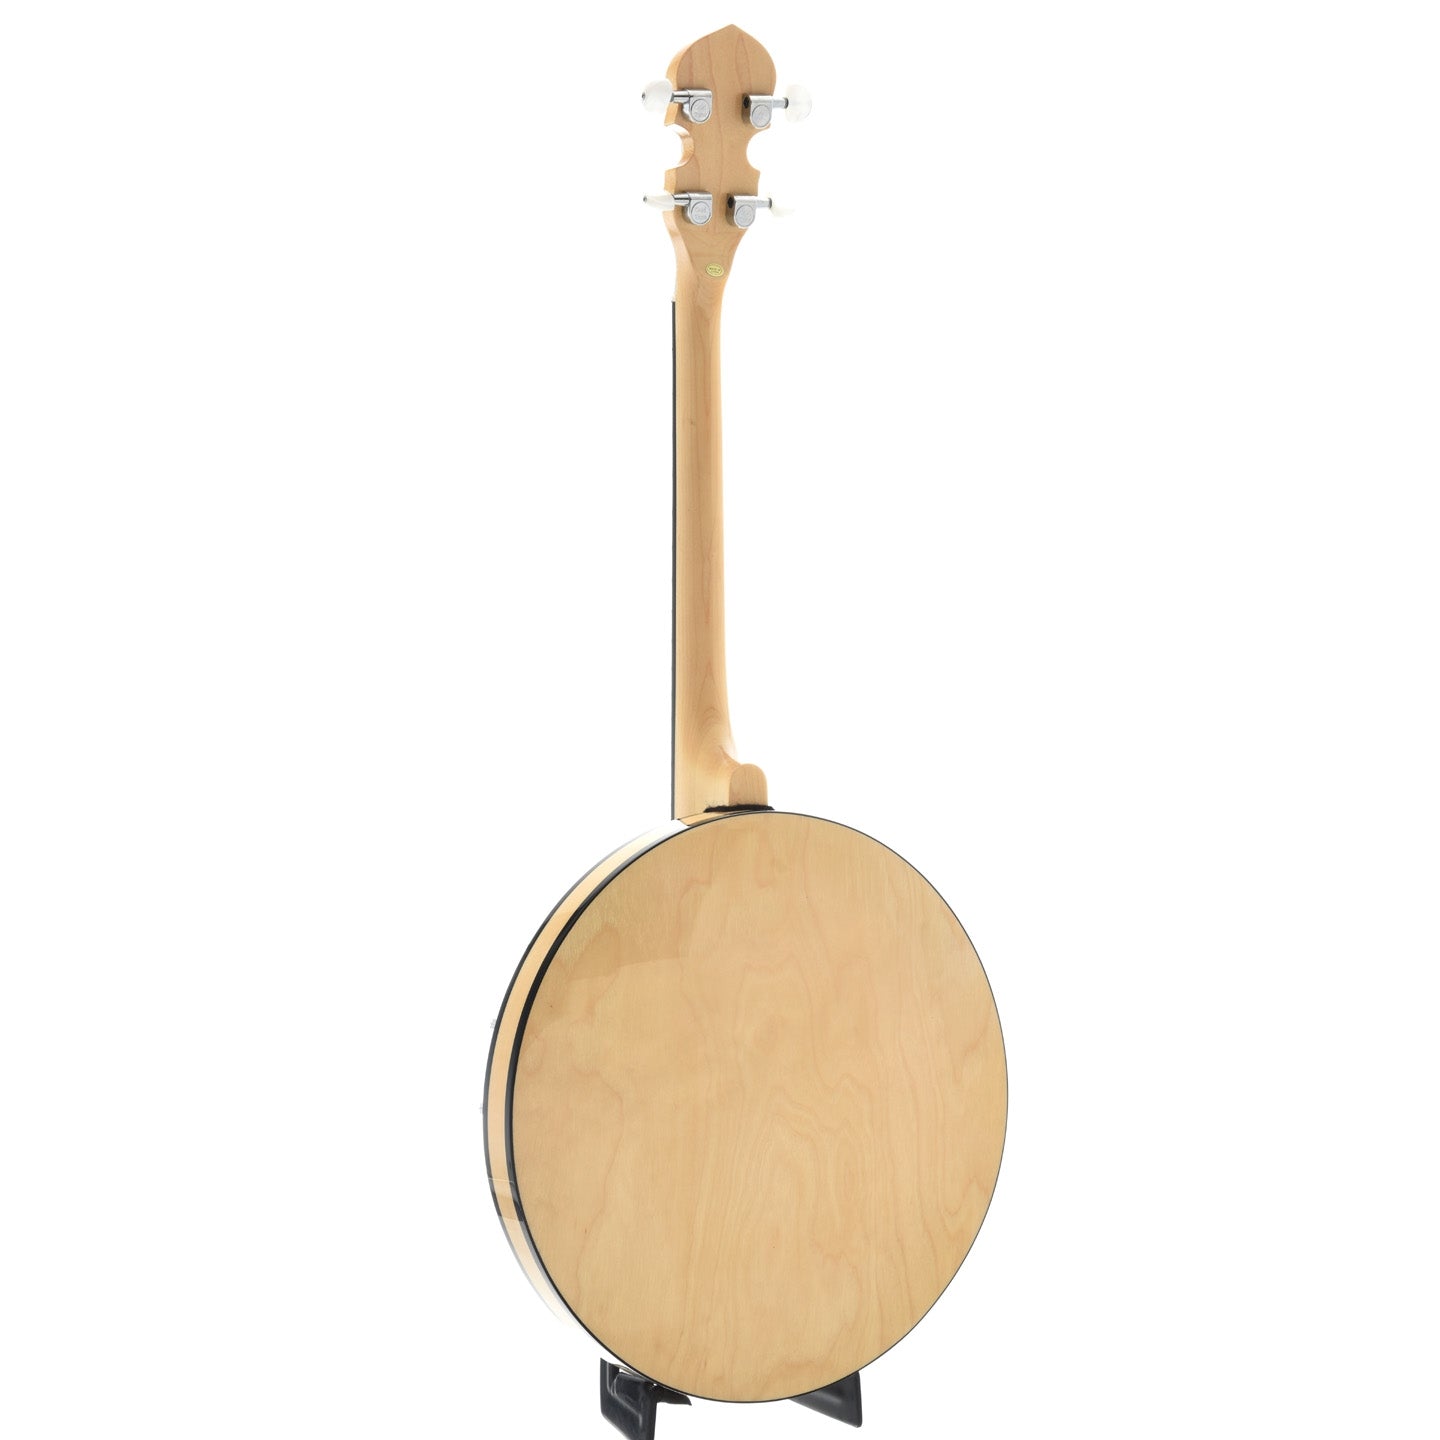 Image 11 of Gold Tone CC-It Irish Tenor Banjo - SKU# GTCCIT : Product Type Tenor & Plectrum Banjos : Elderly Instruments